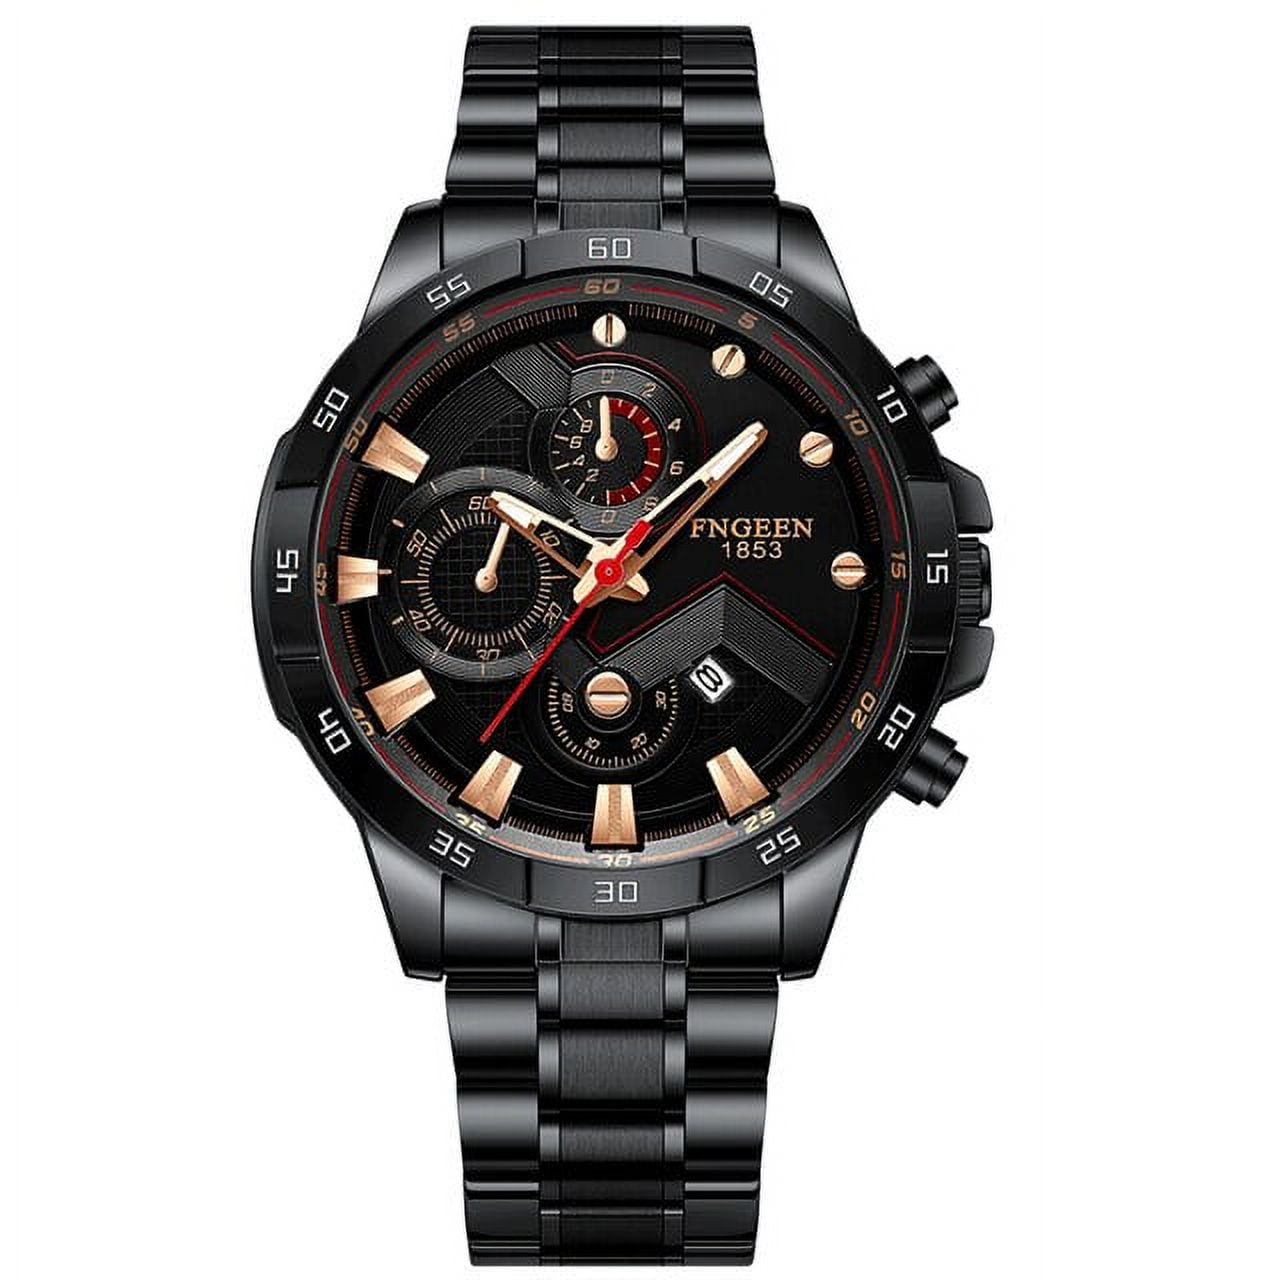 Beautiful Black Watch - Classic & Luxury Fashion Watches